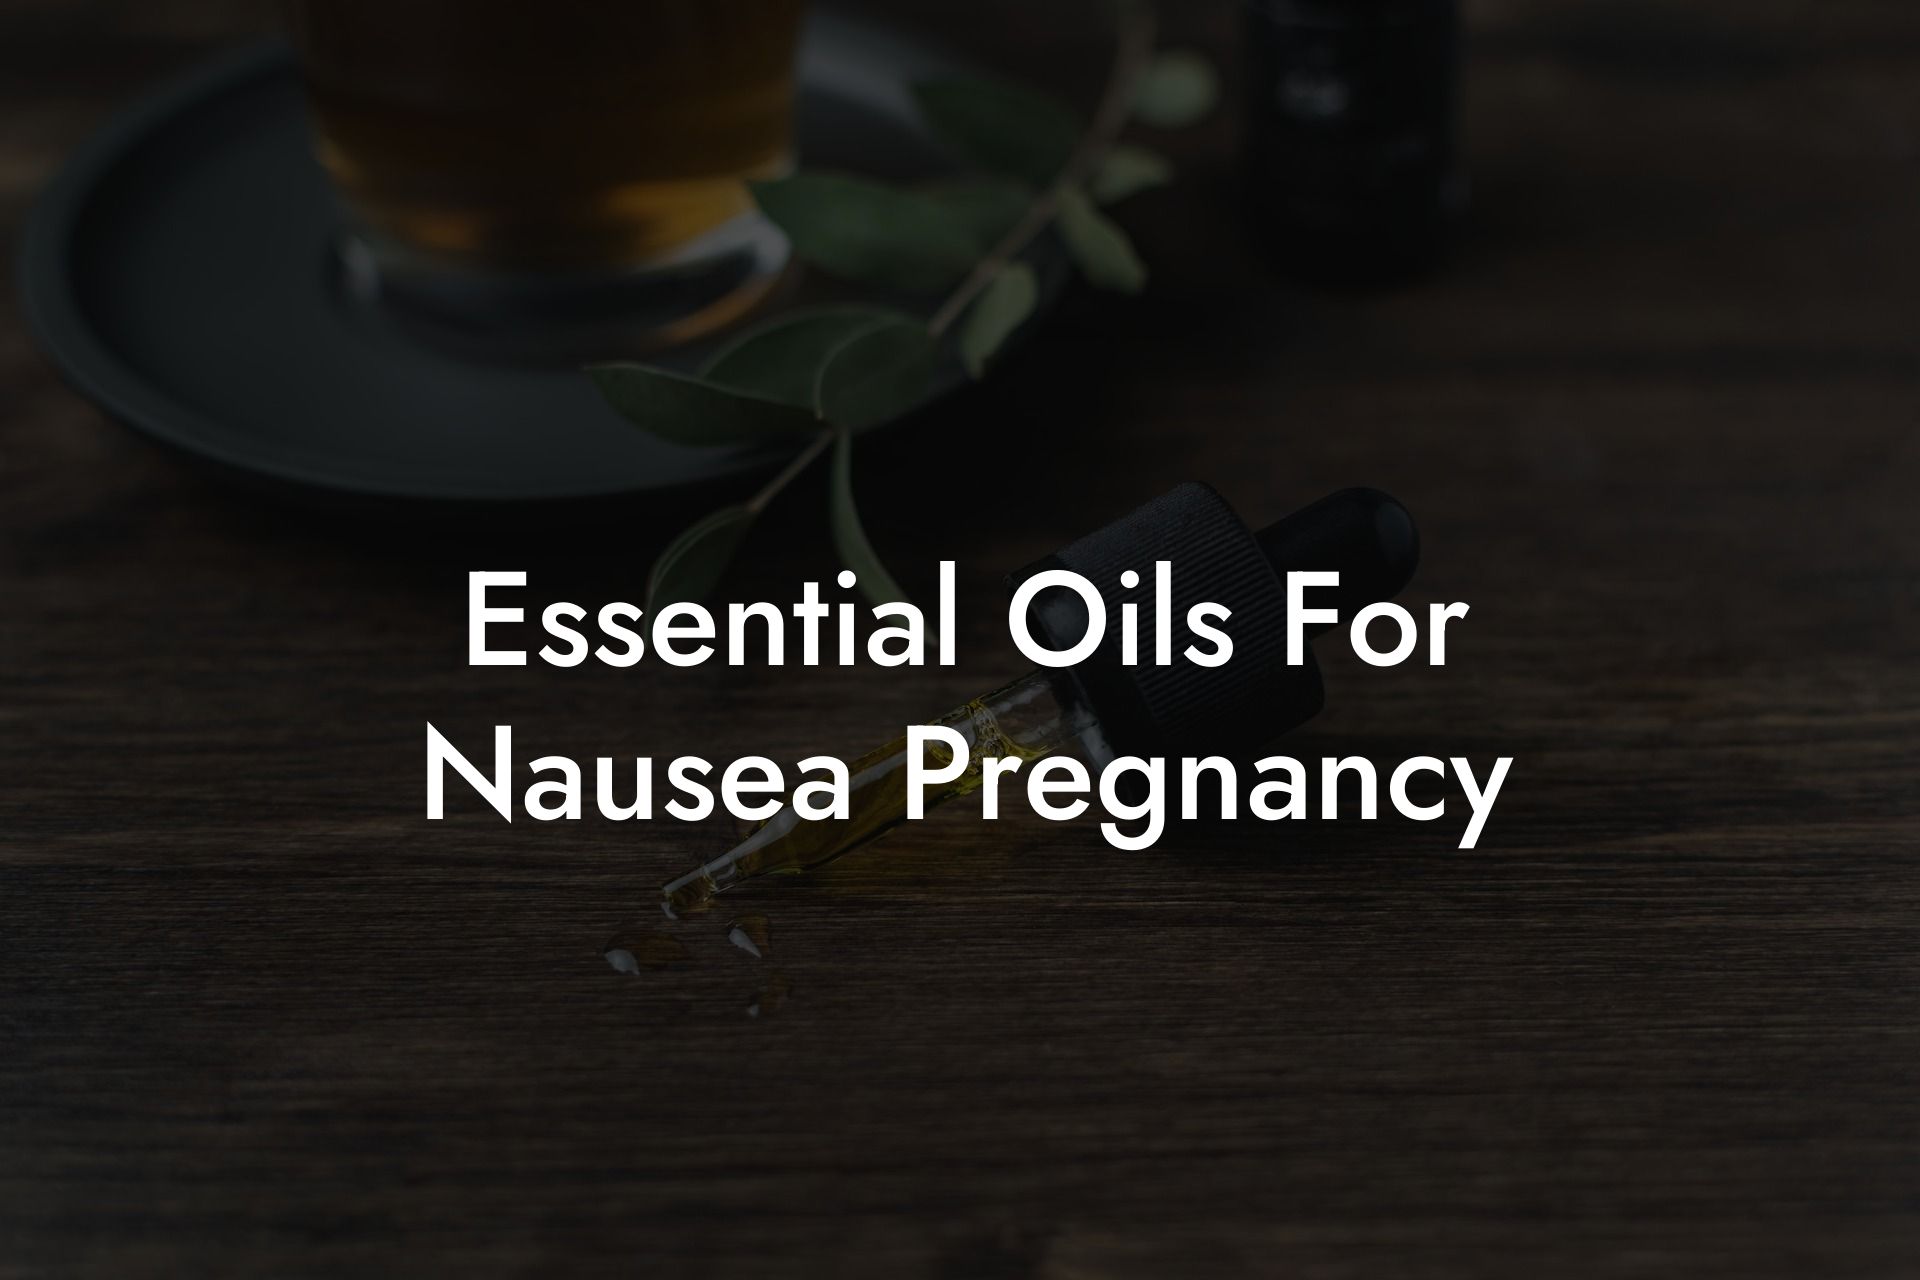 Essential Oils For Nausea Pregnancy